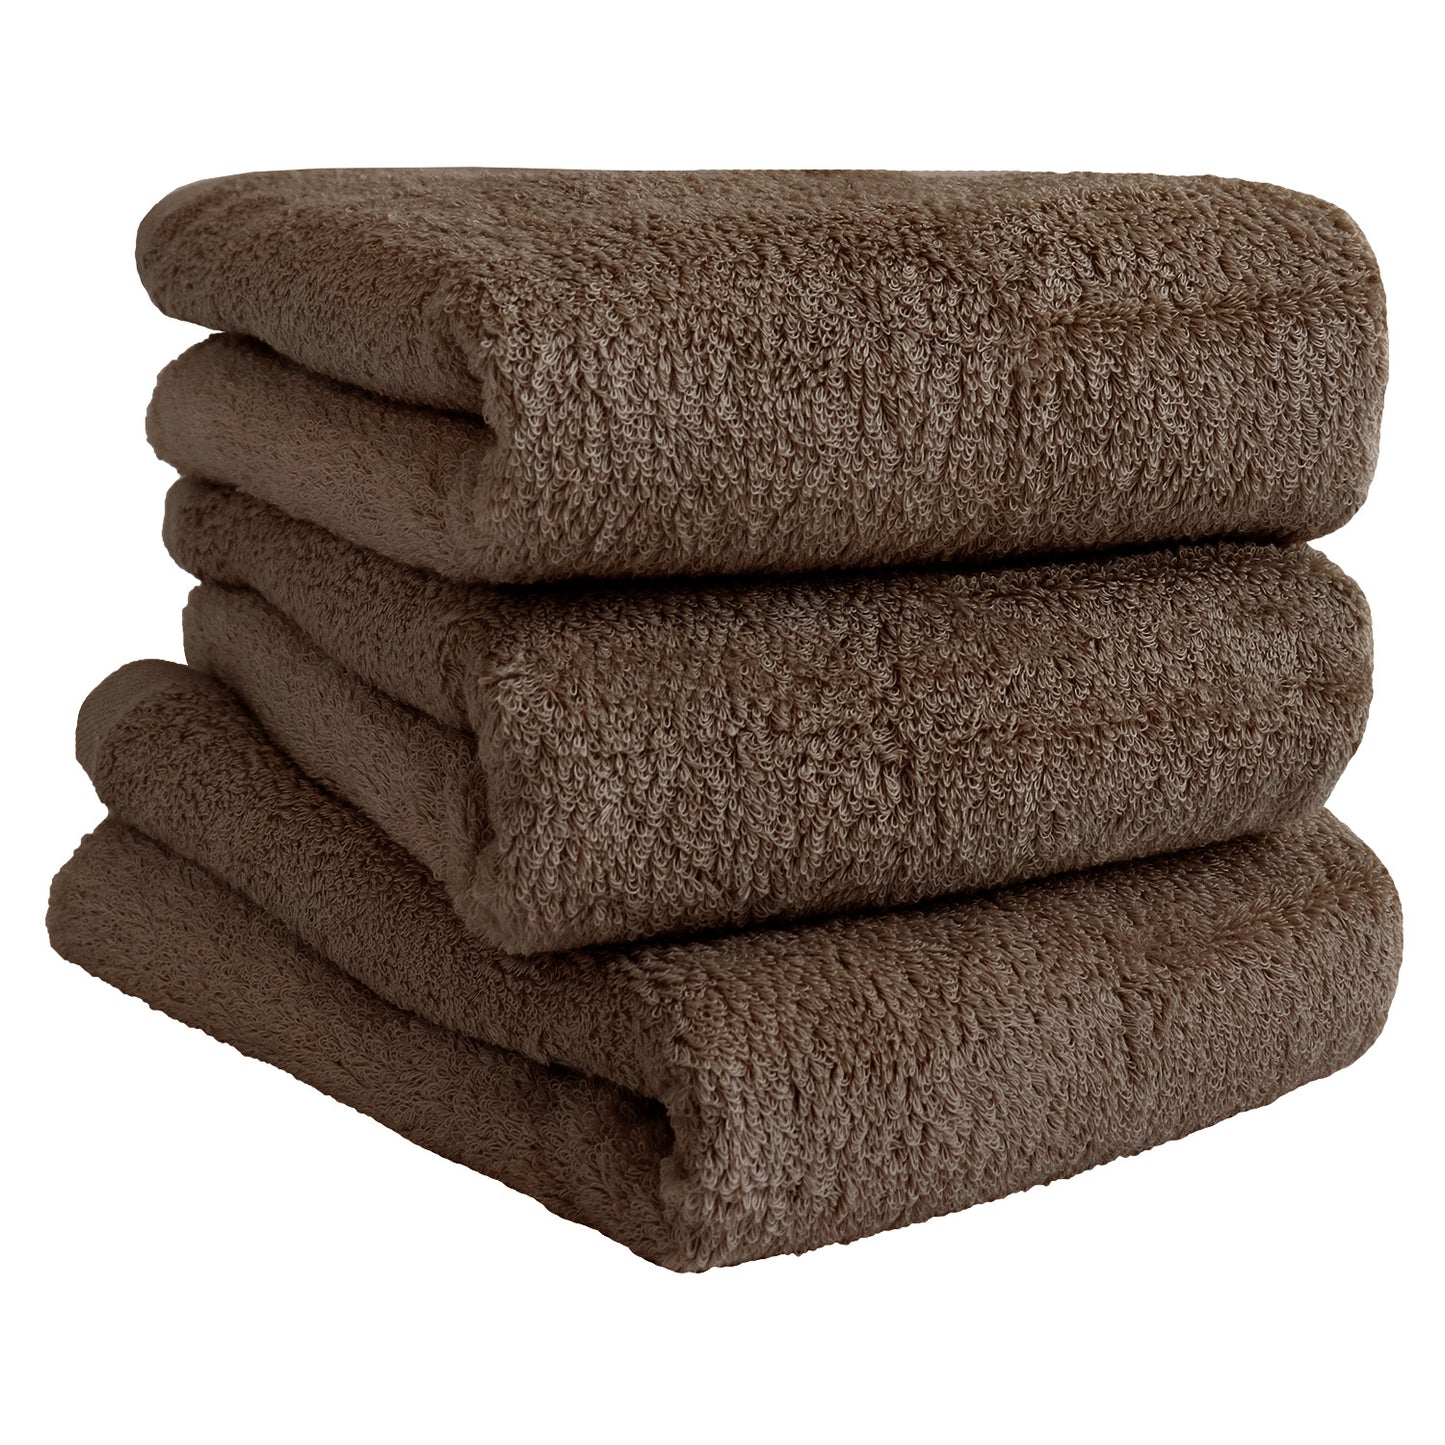 Hiorie Hotel Soft Classy Water-Absorption Mini Bath Towel 3 Sheets Cotton Japan